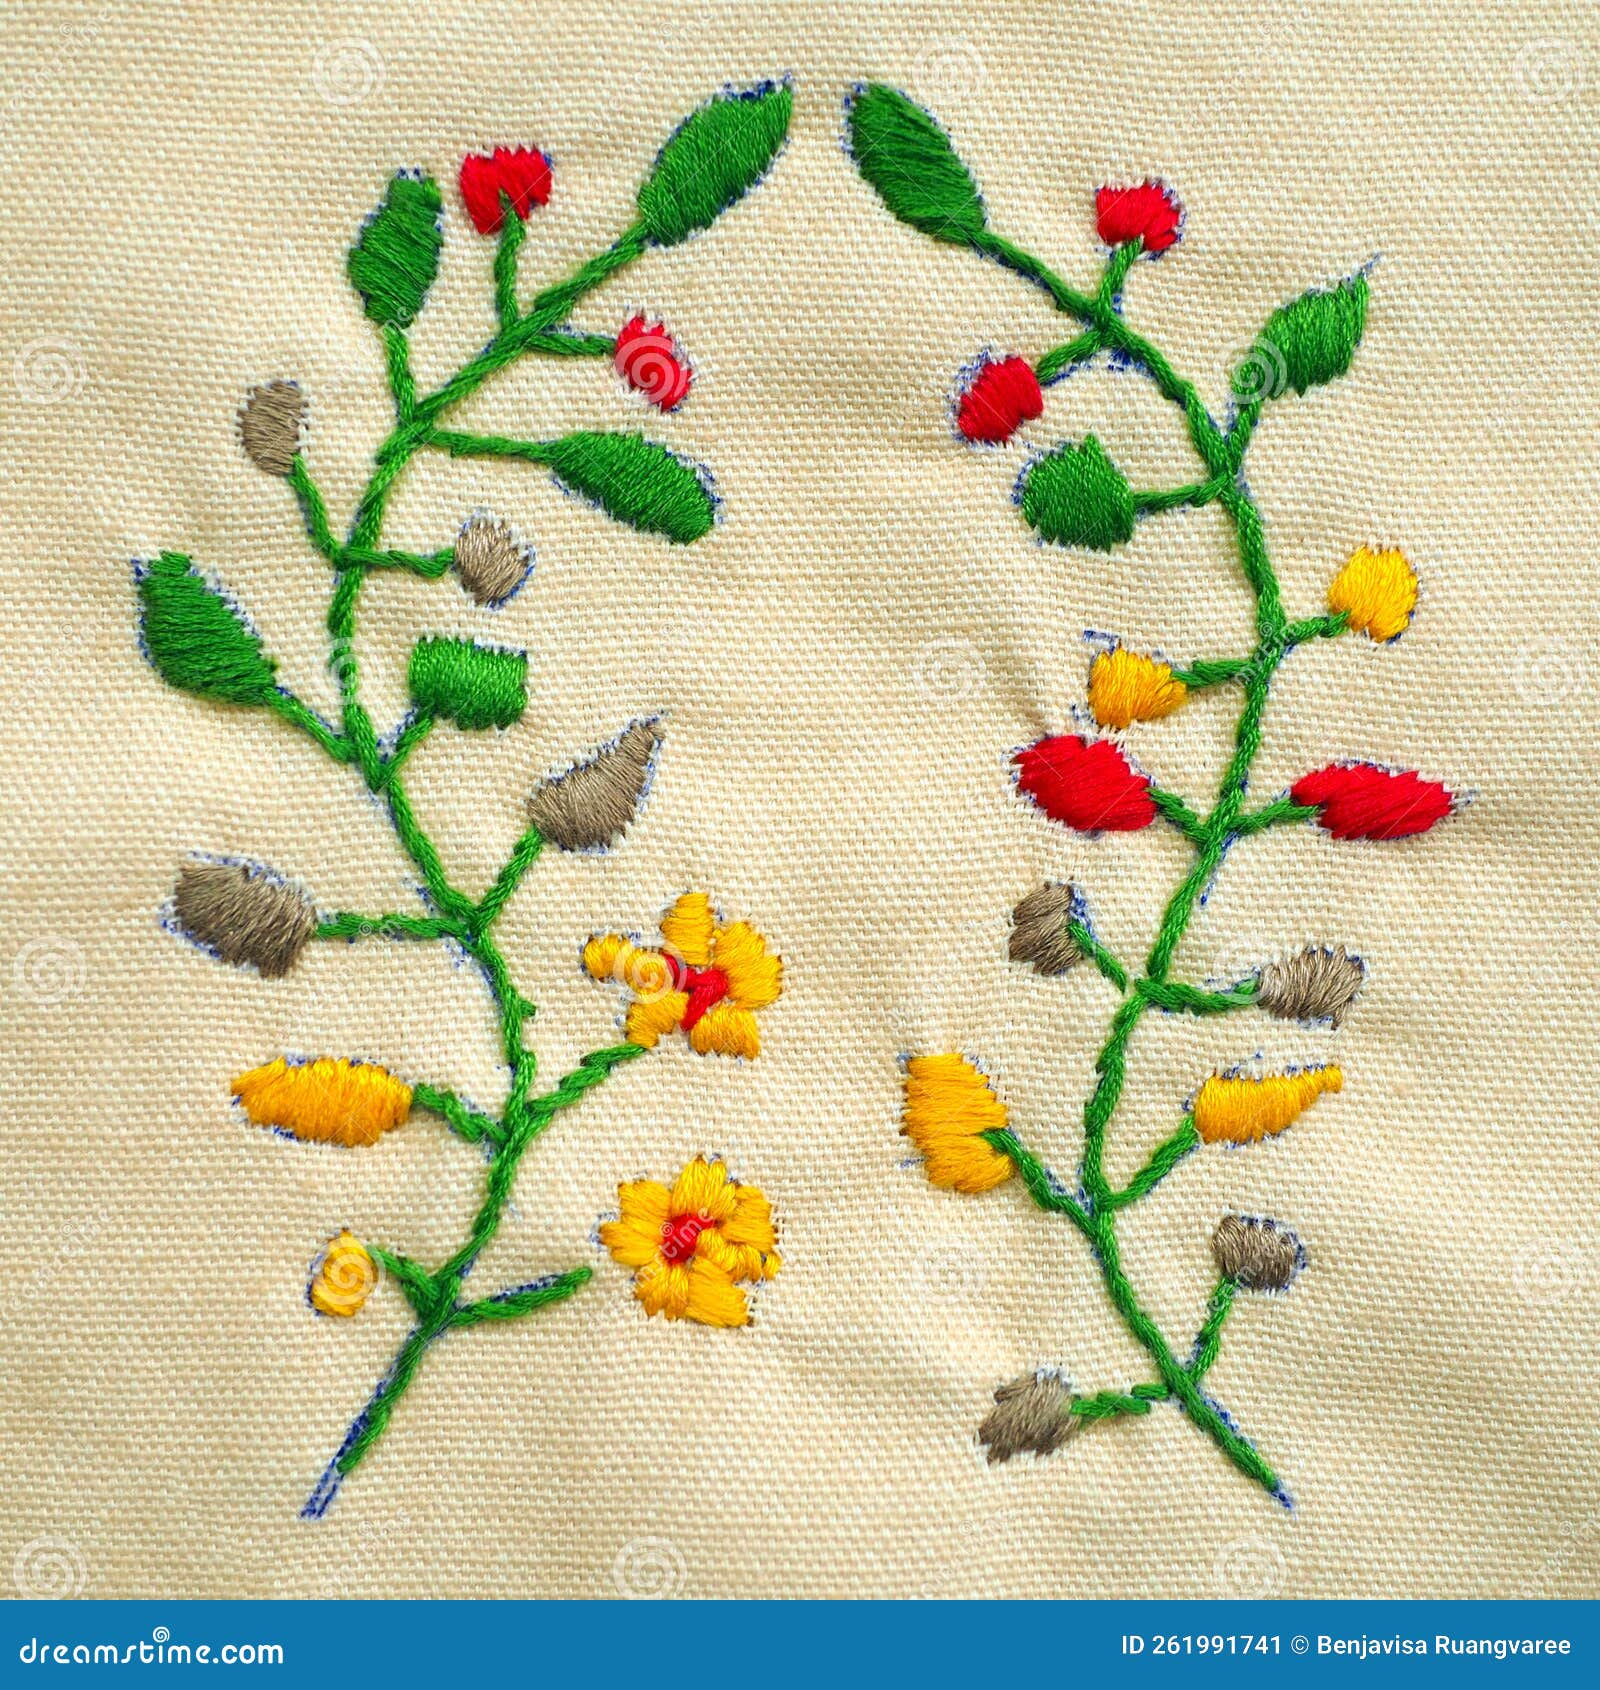 Leisure Arts Embroidery Kit - Desert Flower